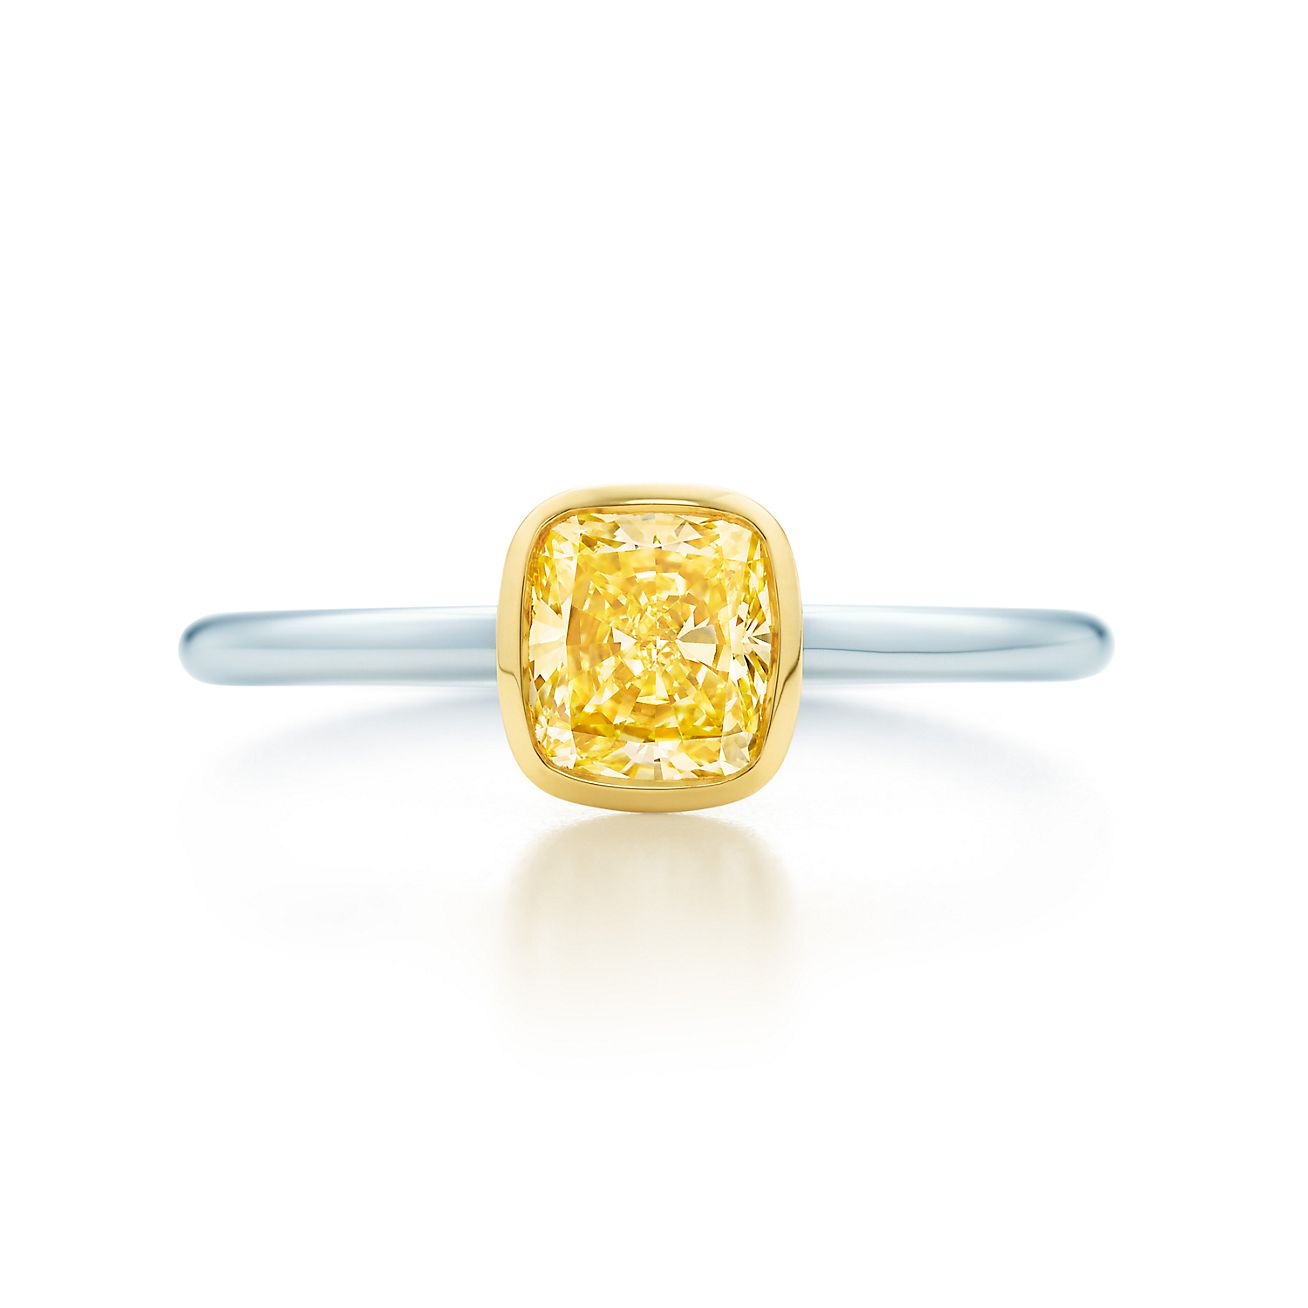 Tiffany Bezet yellow diamond ring in 